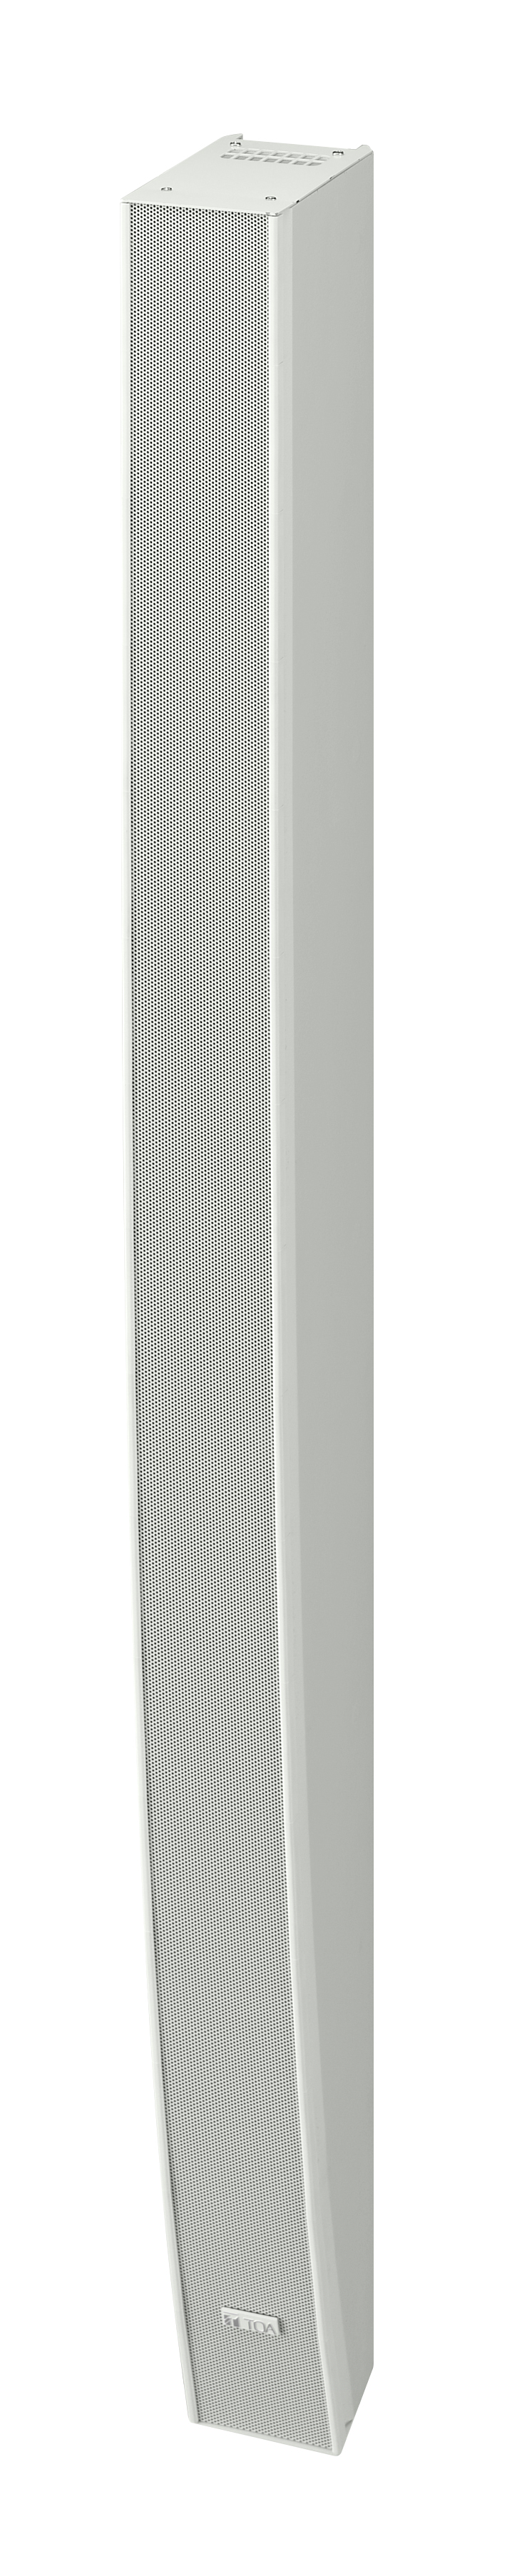 toa array speaker